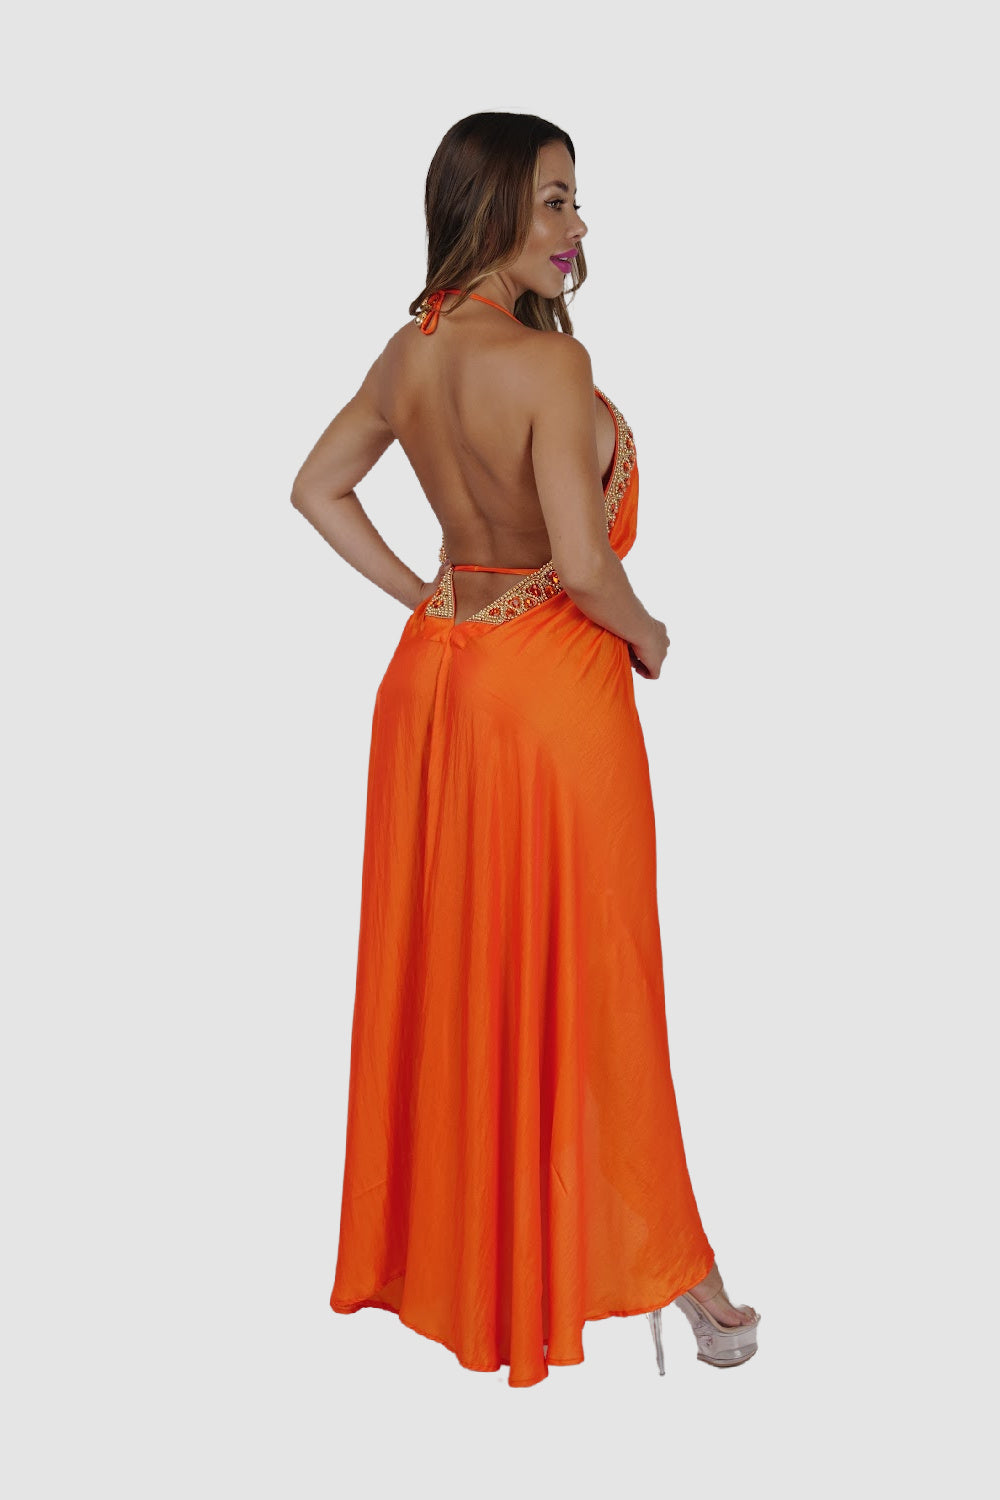 JSQUAD Orange W Gold Dress